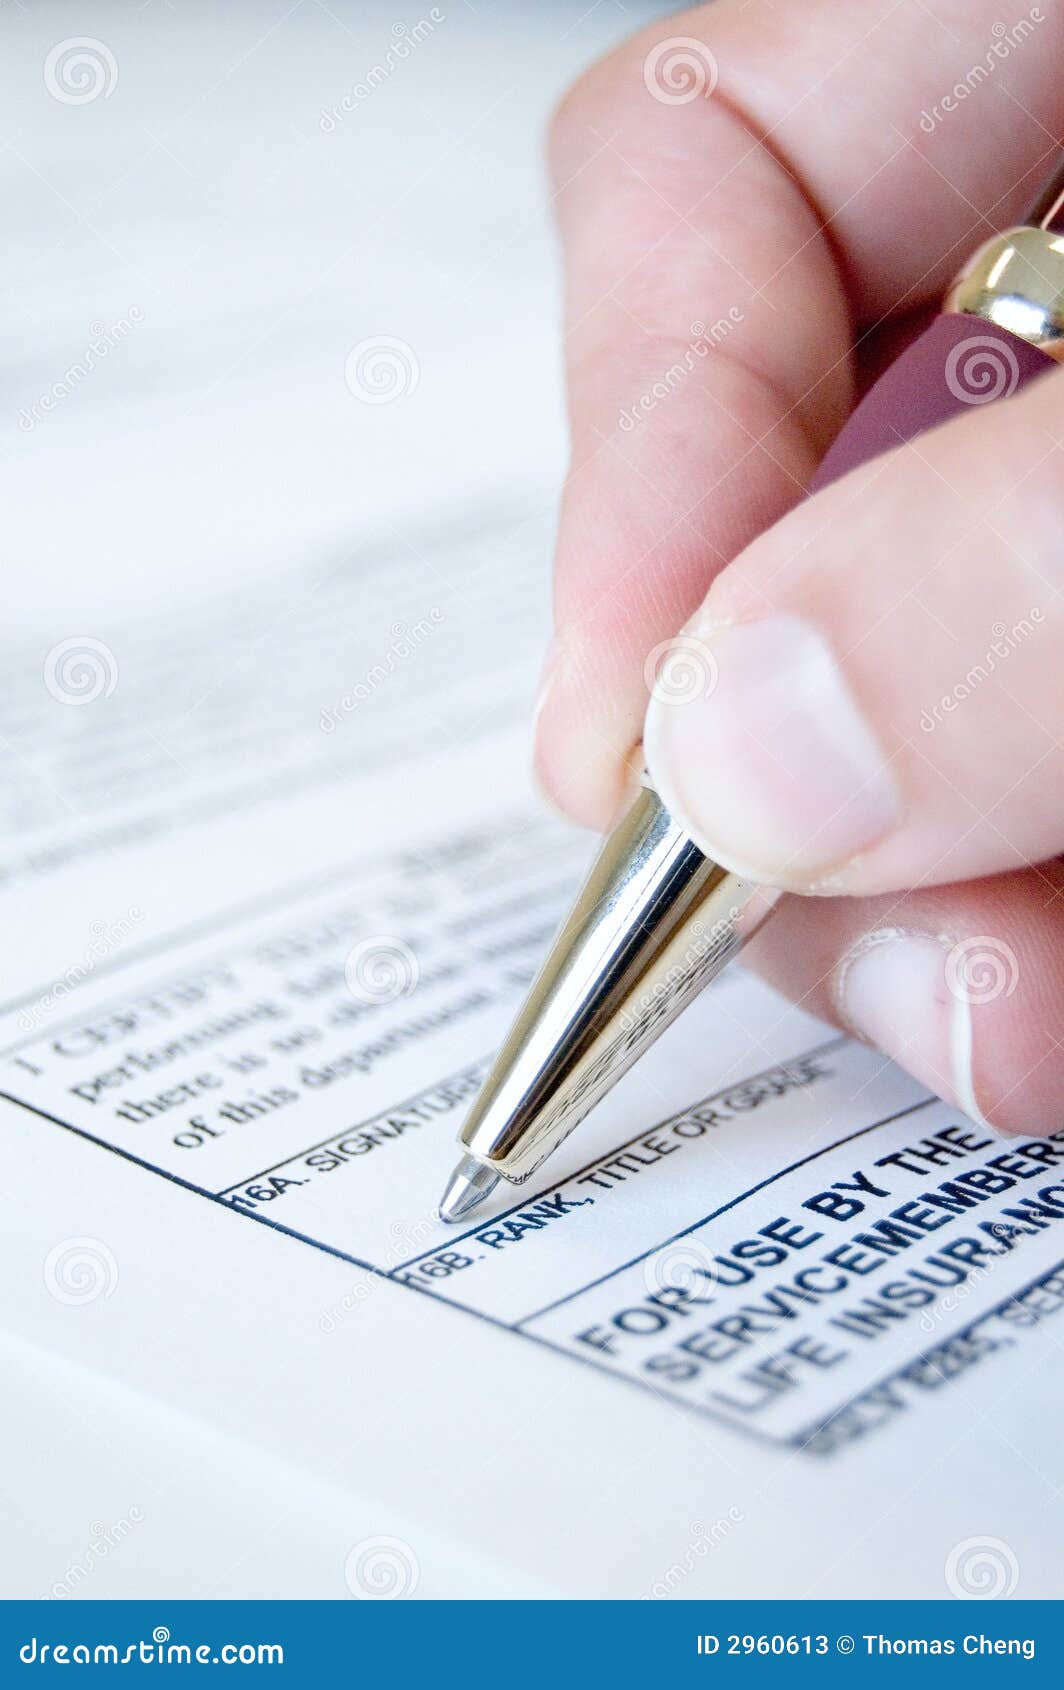 Signing Document Stock Photos - Image: 2960613